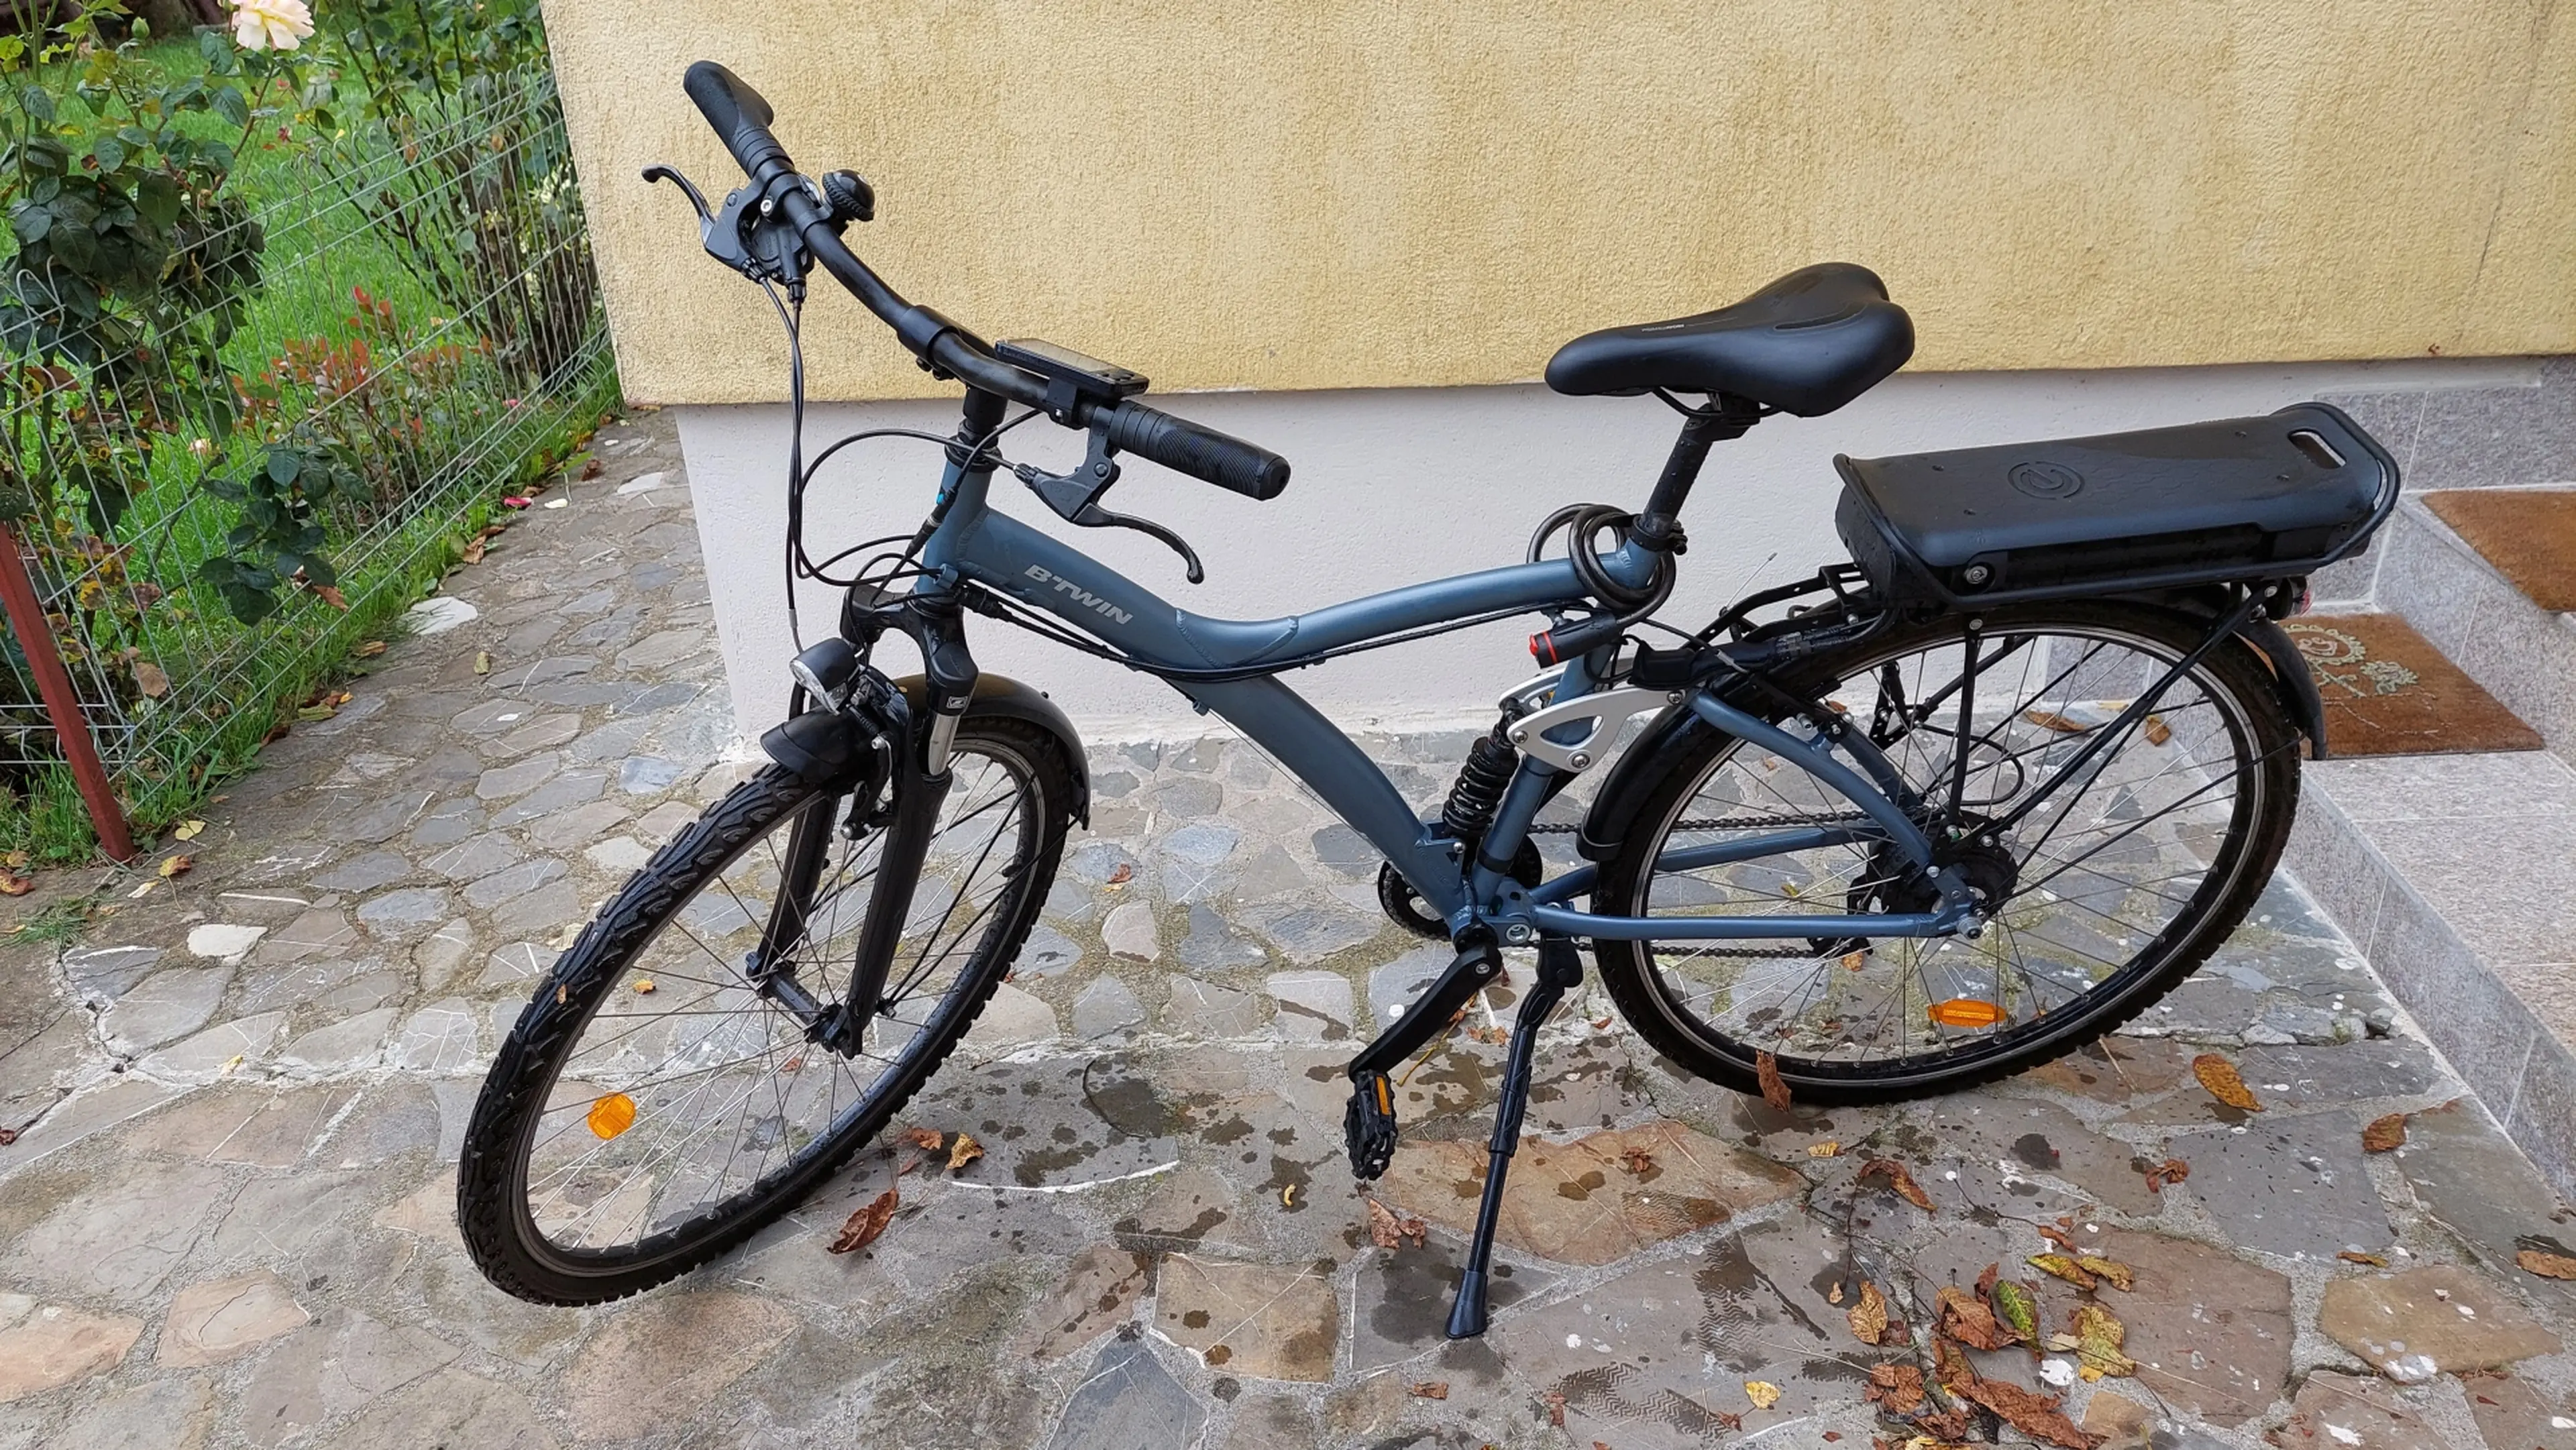 2. Bicicleta electrica B'twin e920